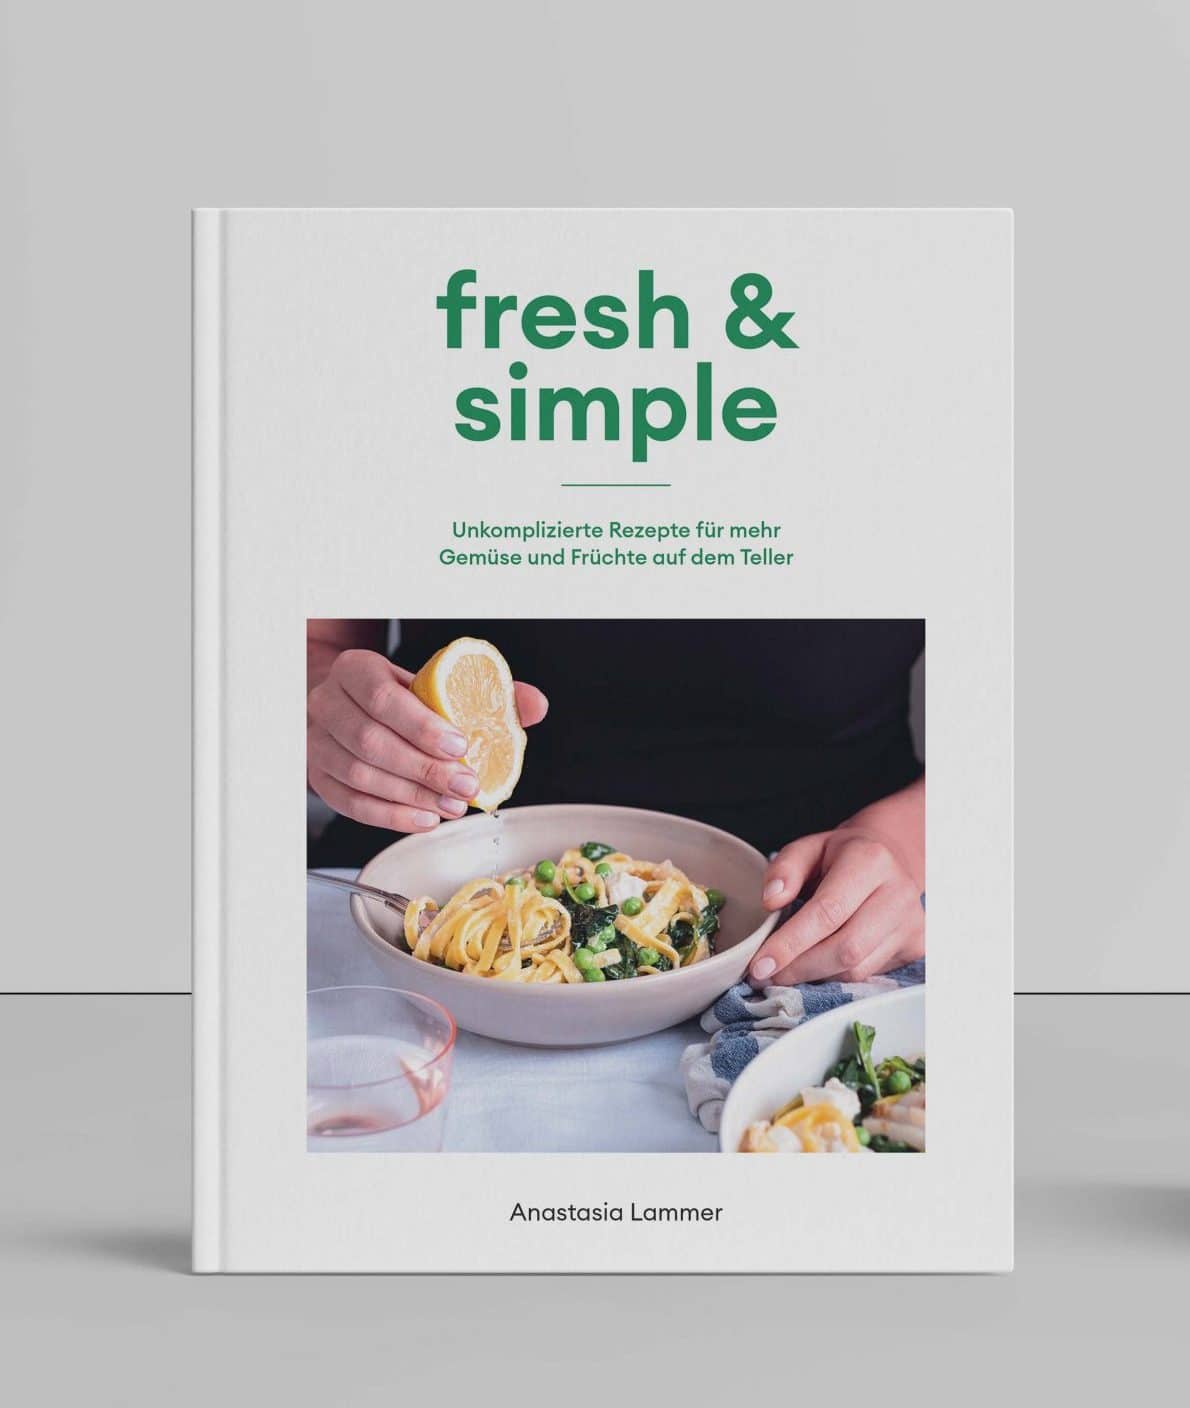 Bestseller Kochbuch "fresh&simple" von Food Bloggerin Anastasia Lammer ANA+NINA